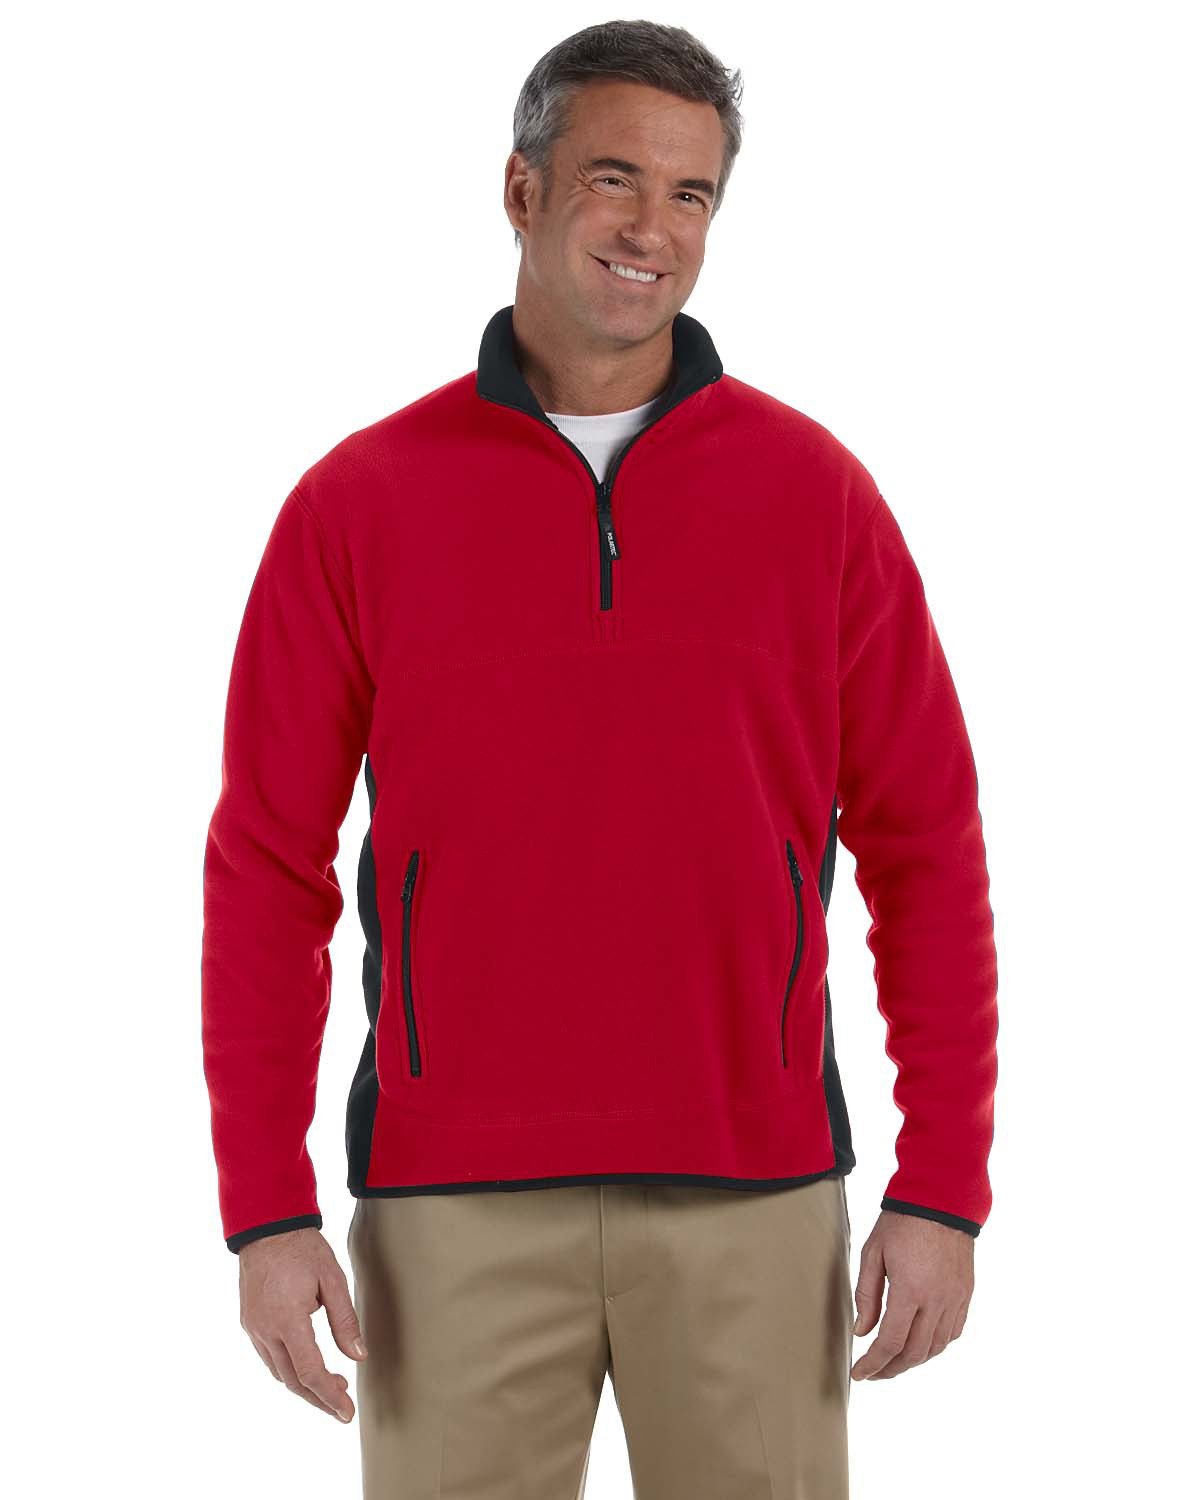 Chestnut Hill Polartec® Colorblock Quarter-Zip Fleece Jacket